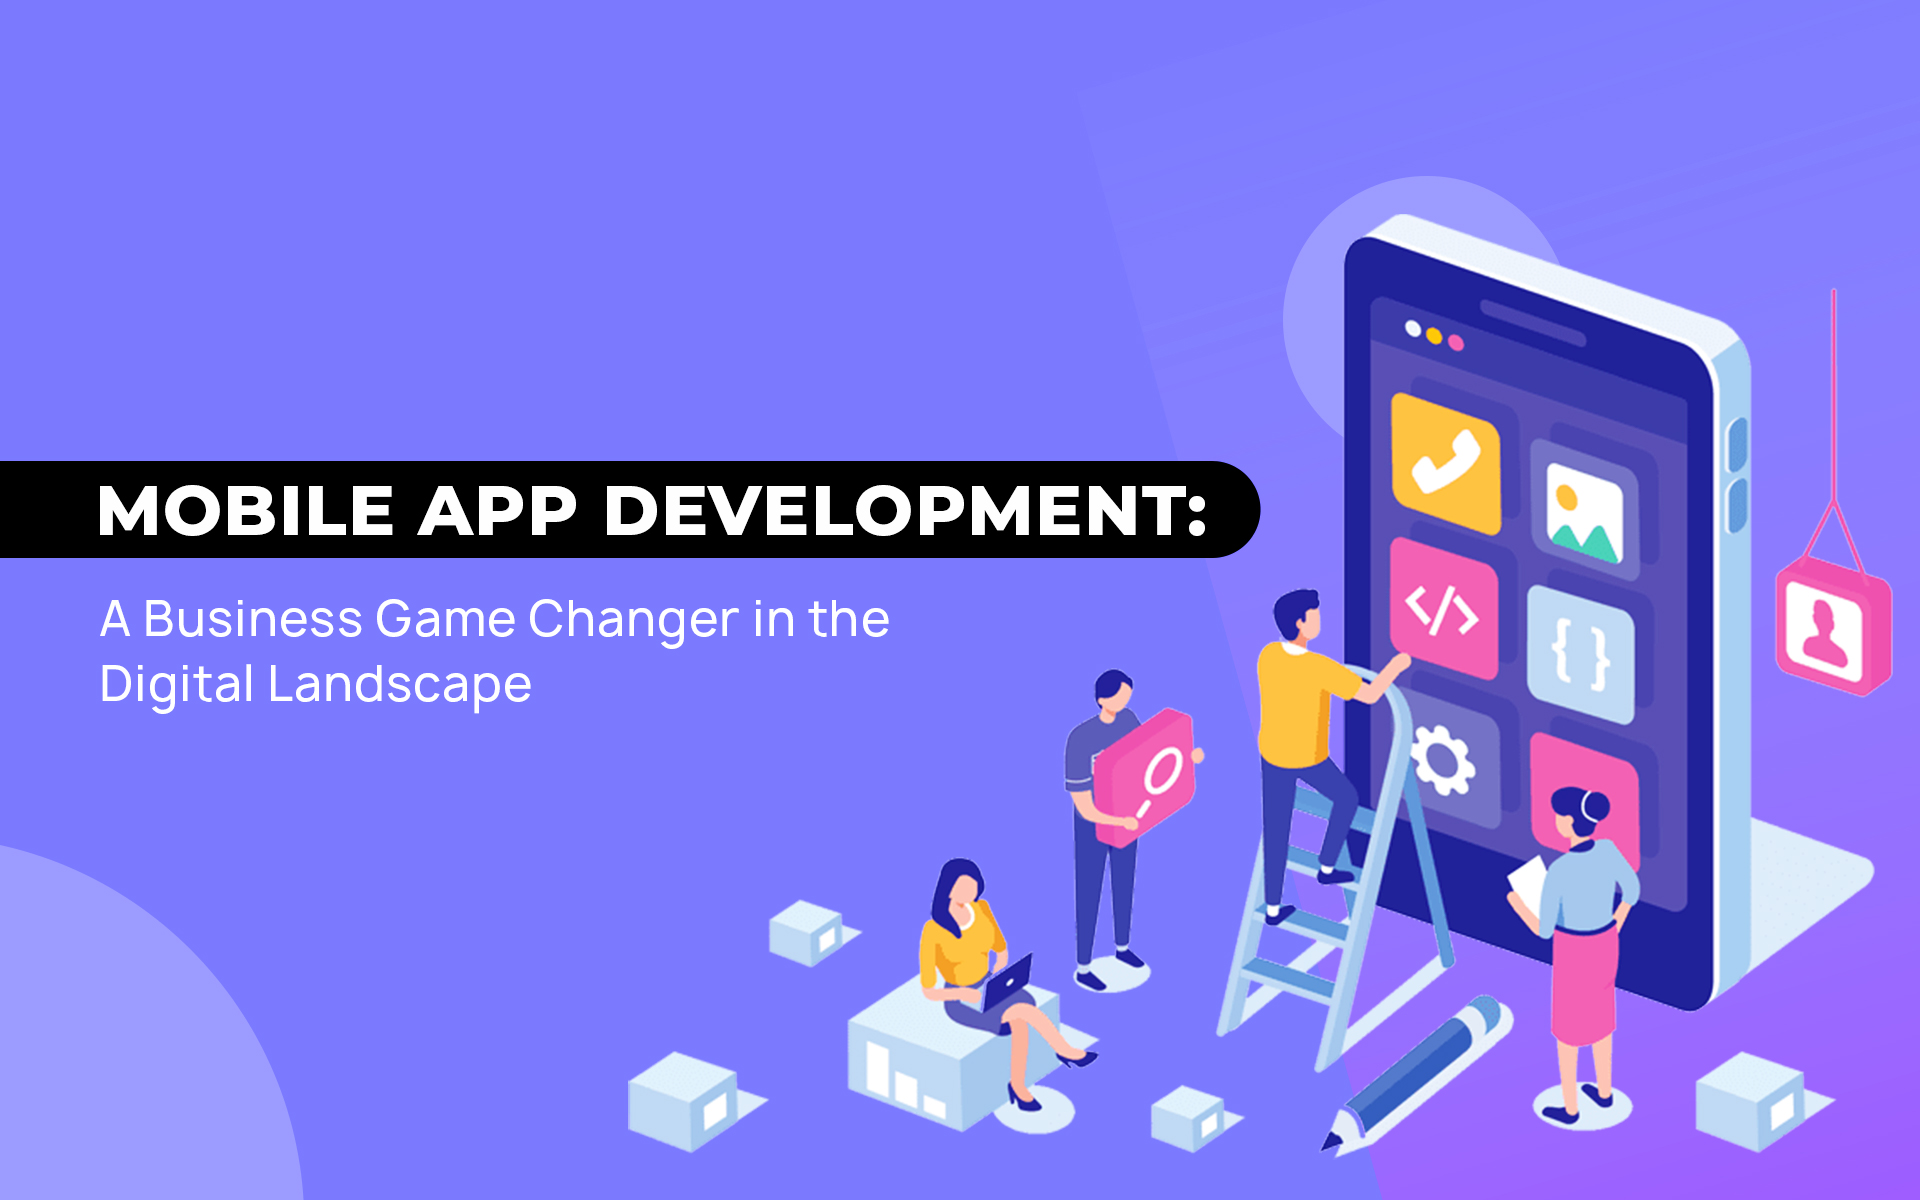 Mobile App Development: A Business Game Changer in the Digital Landscape